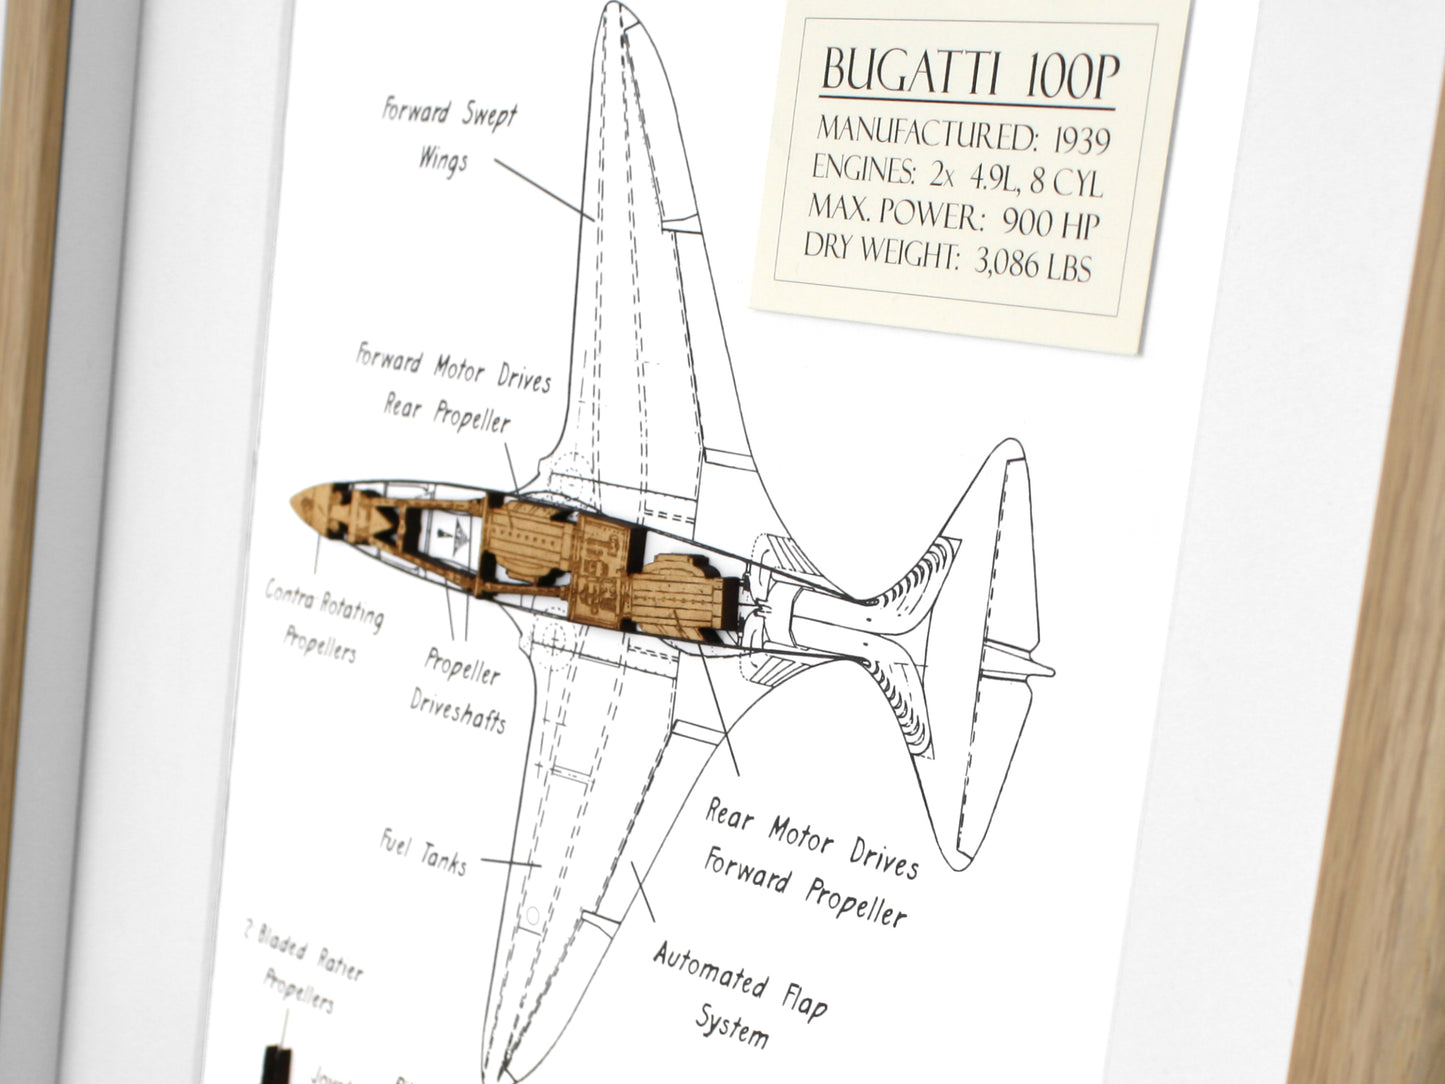 Bugatti 100P aviation art